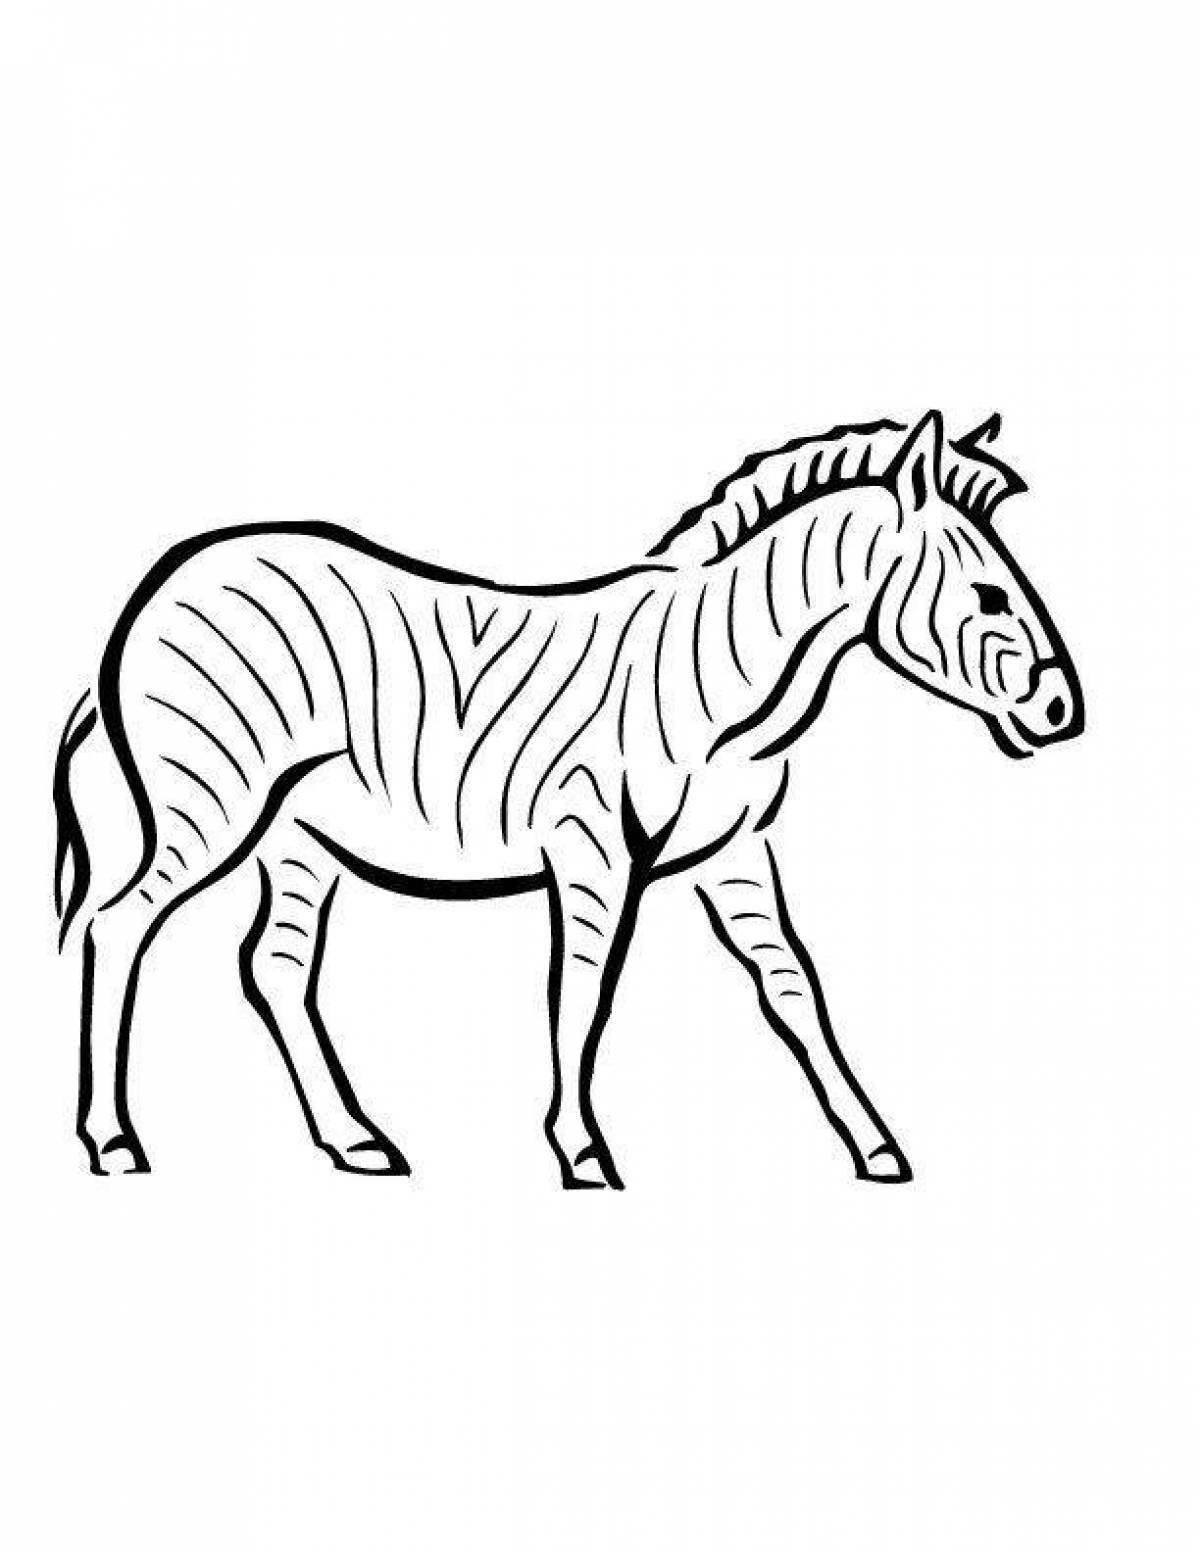 Cheerful zebra without stripes